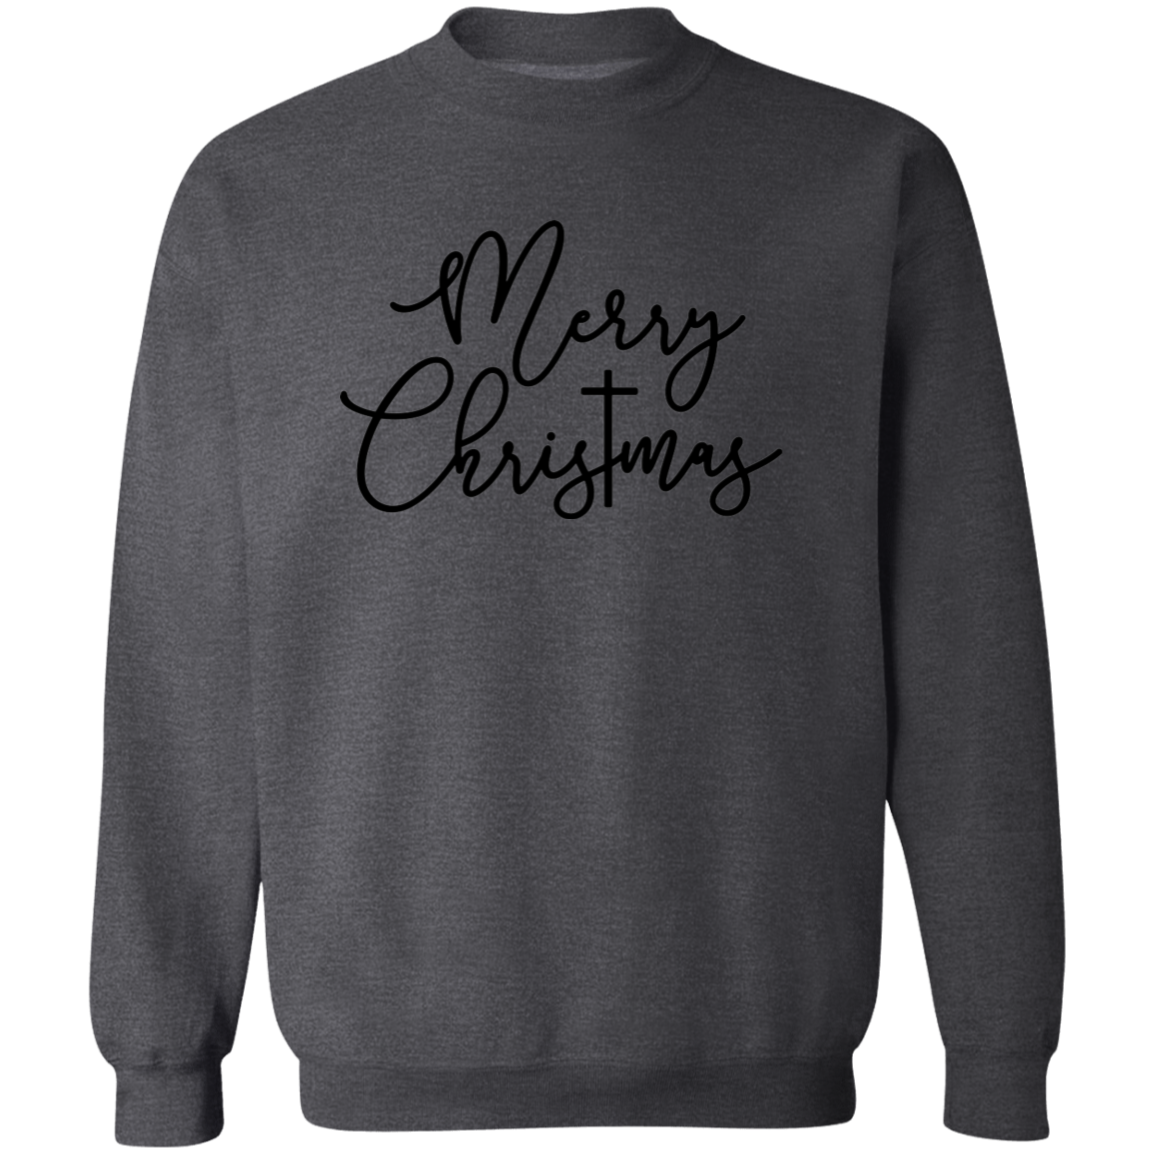 MERRY "CHRIST"MAS SWEATSHIRT, Christian Christmas sweater, Jesus sweatshirt